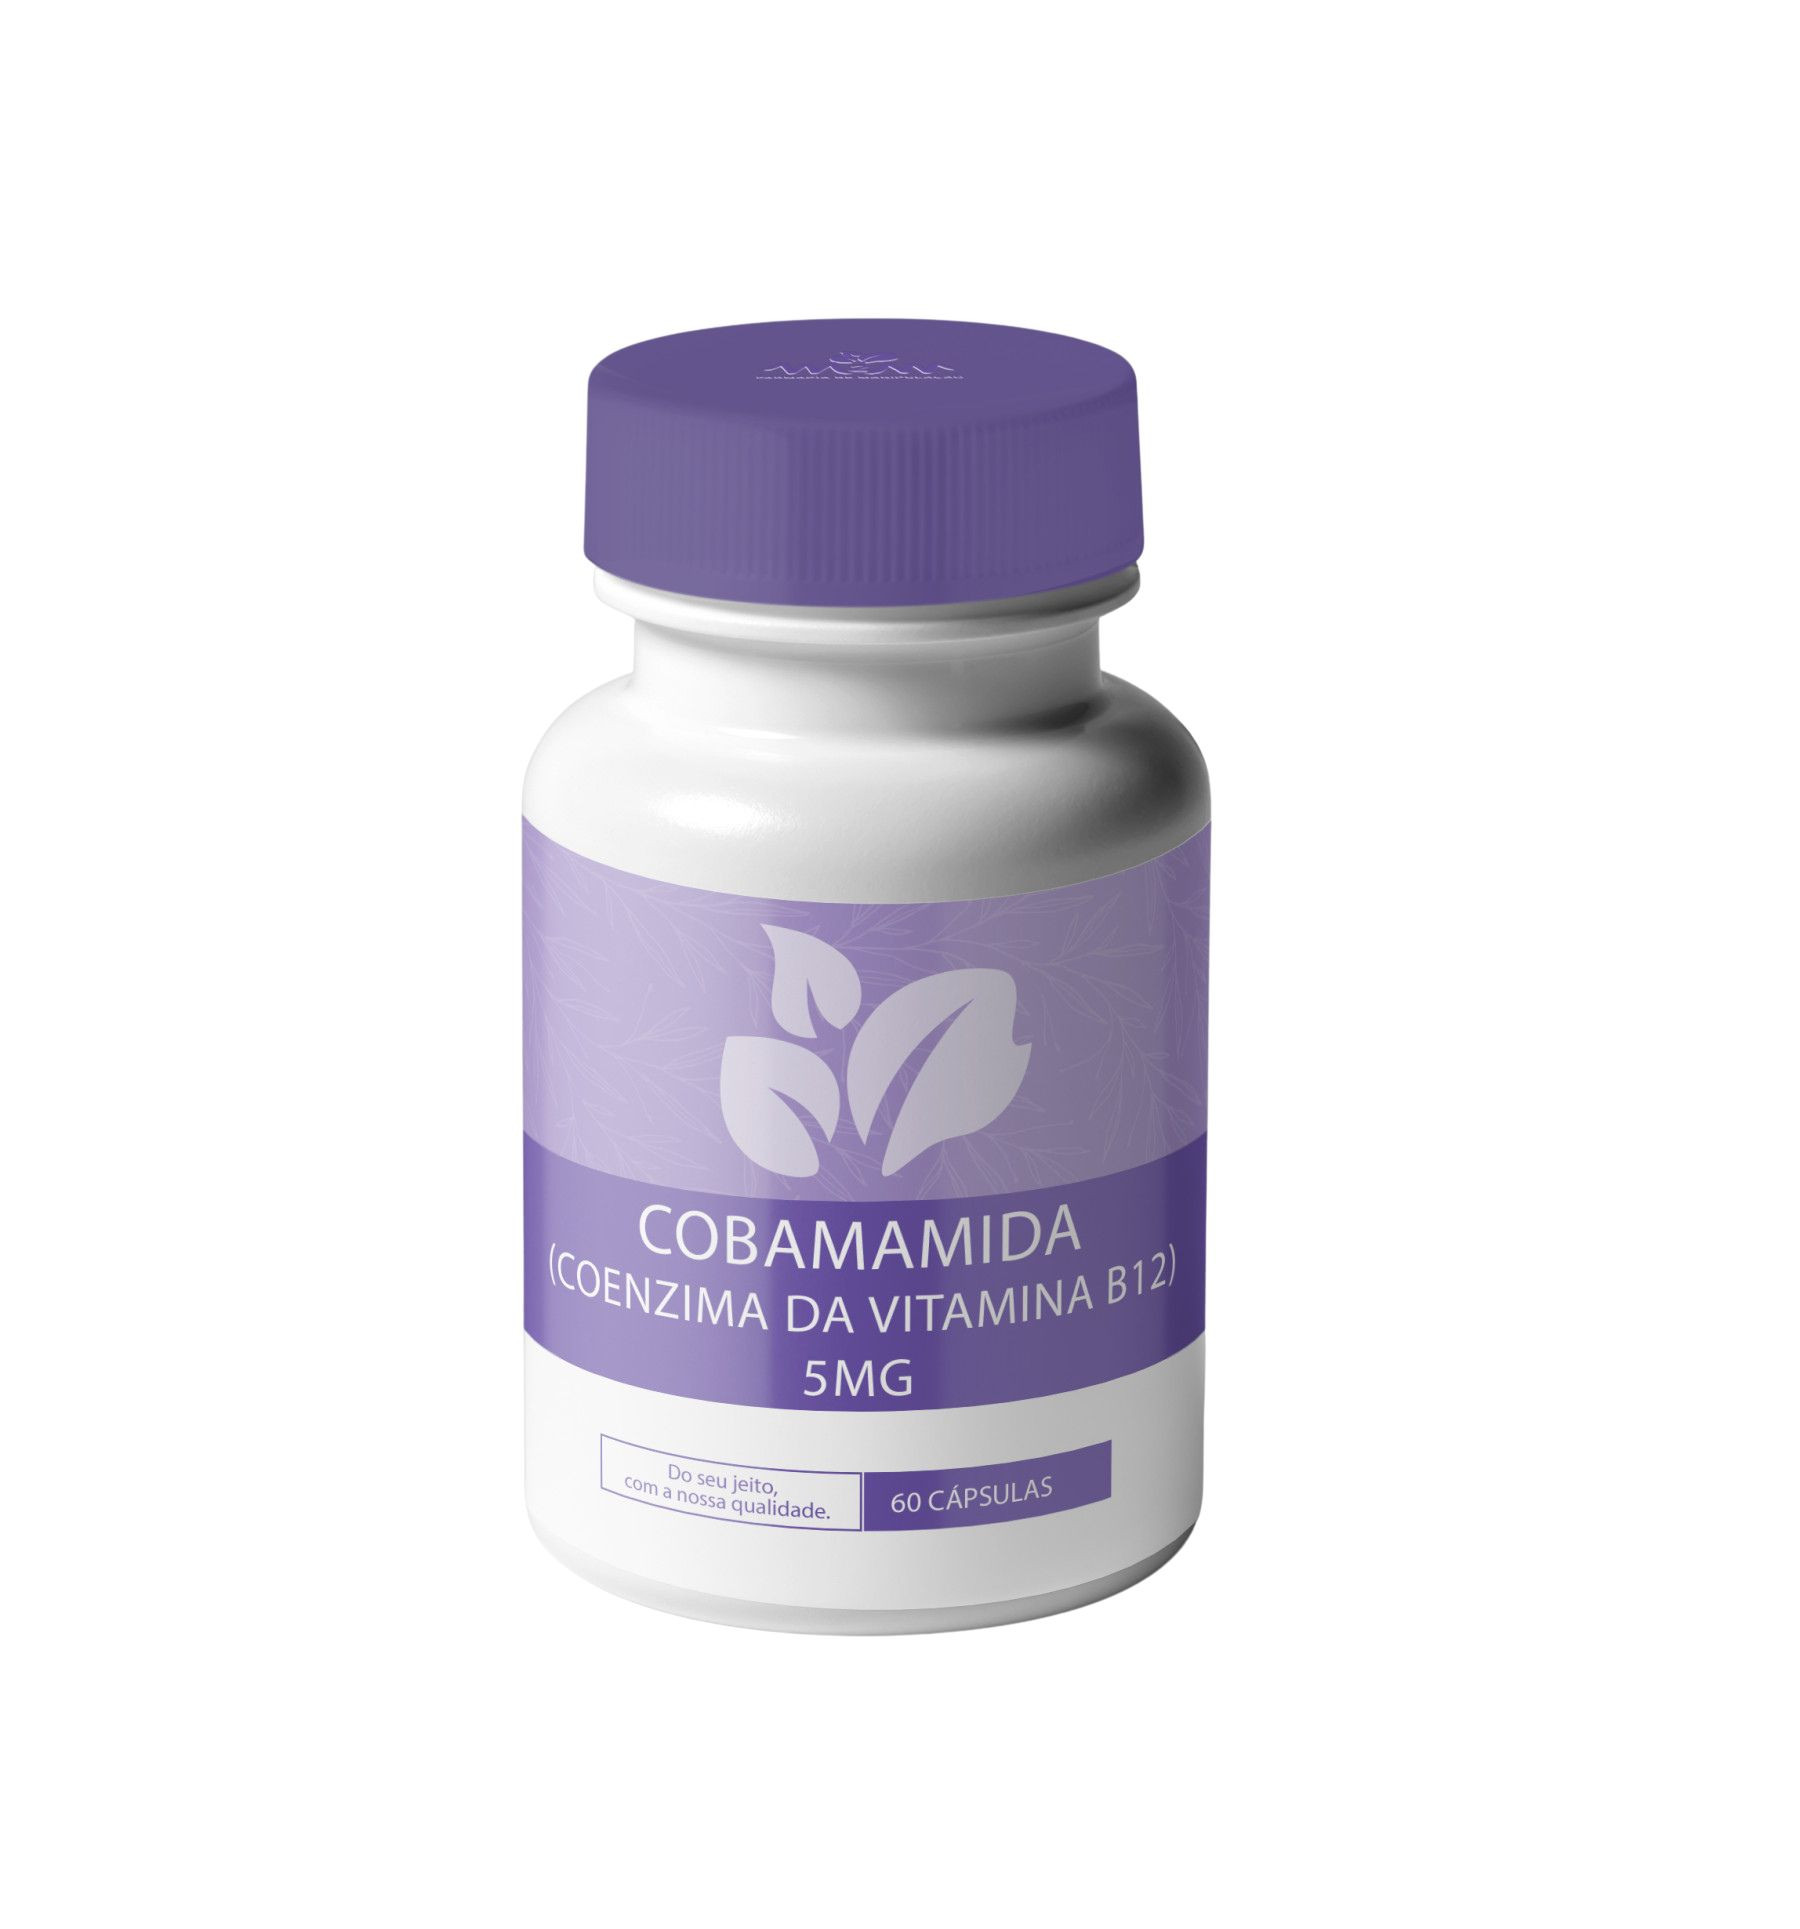 Cobamamida 5mg (Coenzima da Vitamina B12) Cápsulas